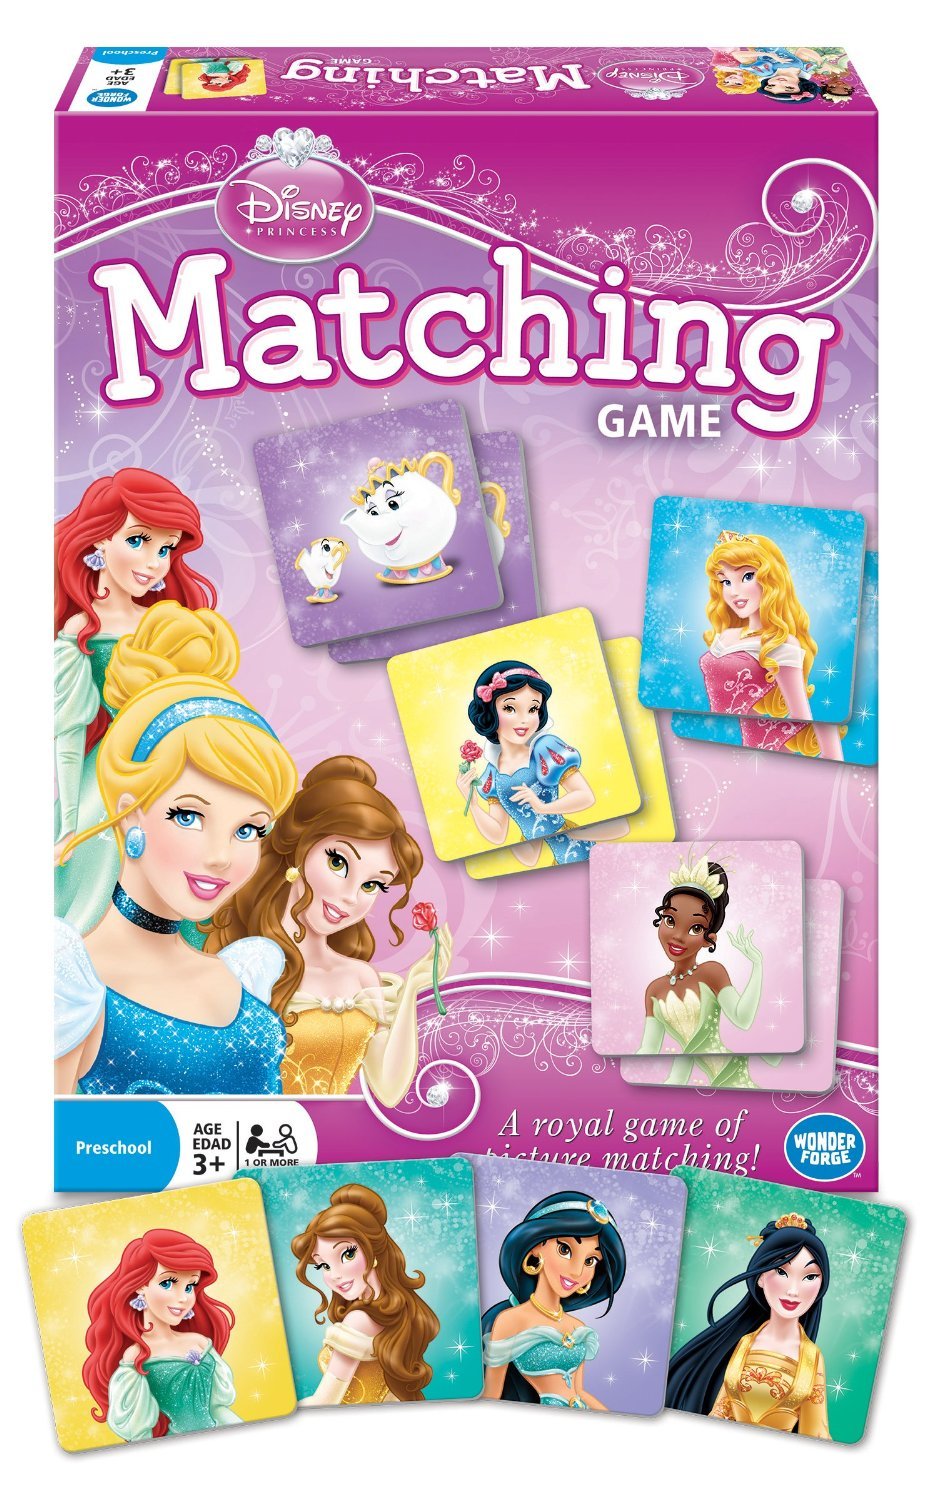 Wonder Forge Disney Princess Matching Game For Girls & Boys Age 3 To 5 - A Fun & Fast Princess Memory Game,Original Version